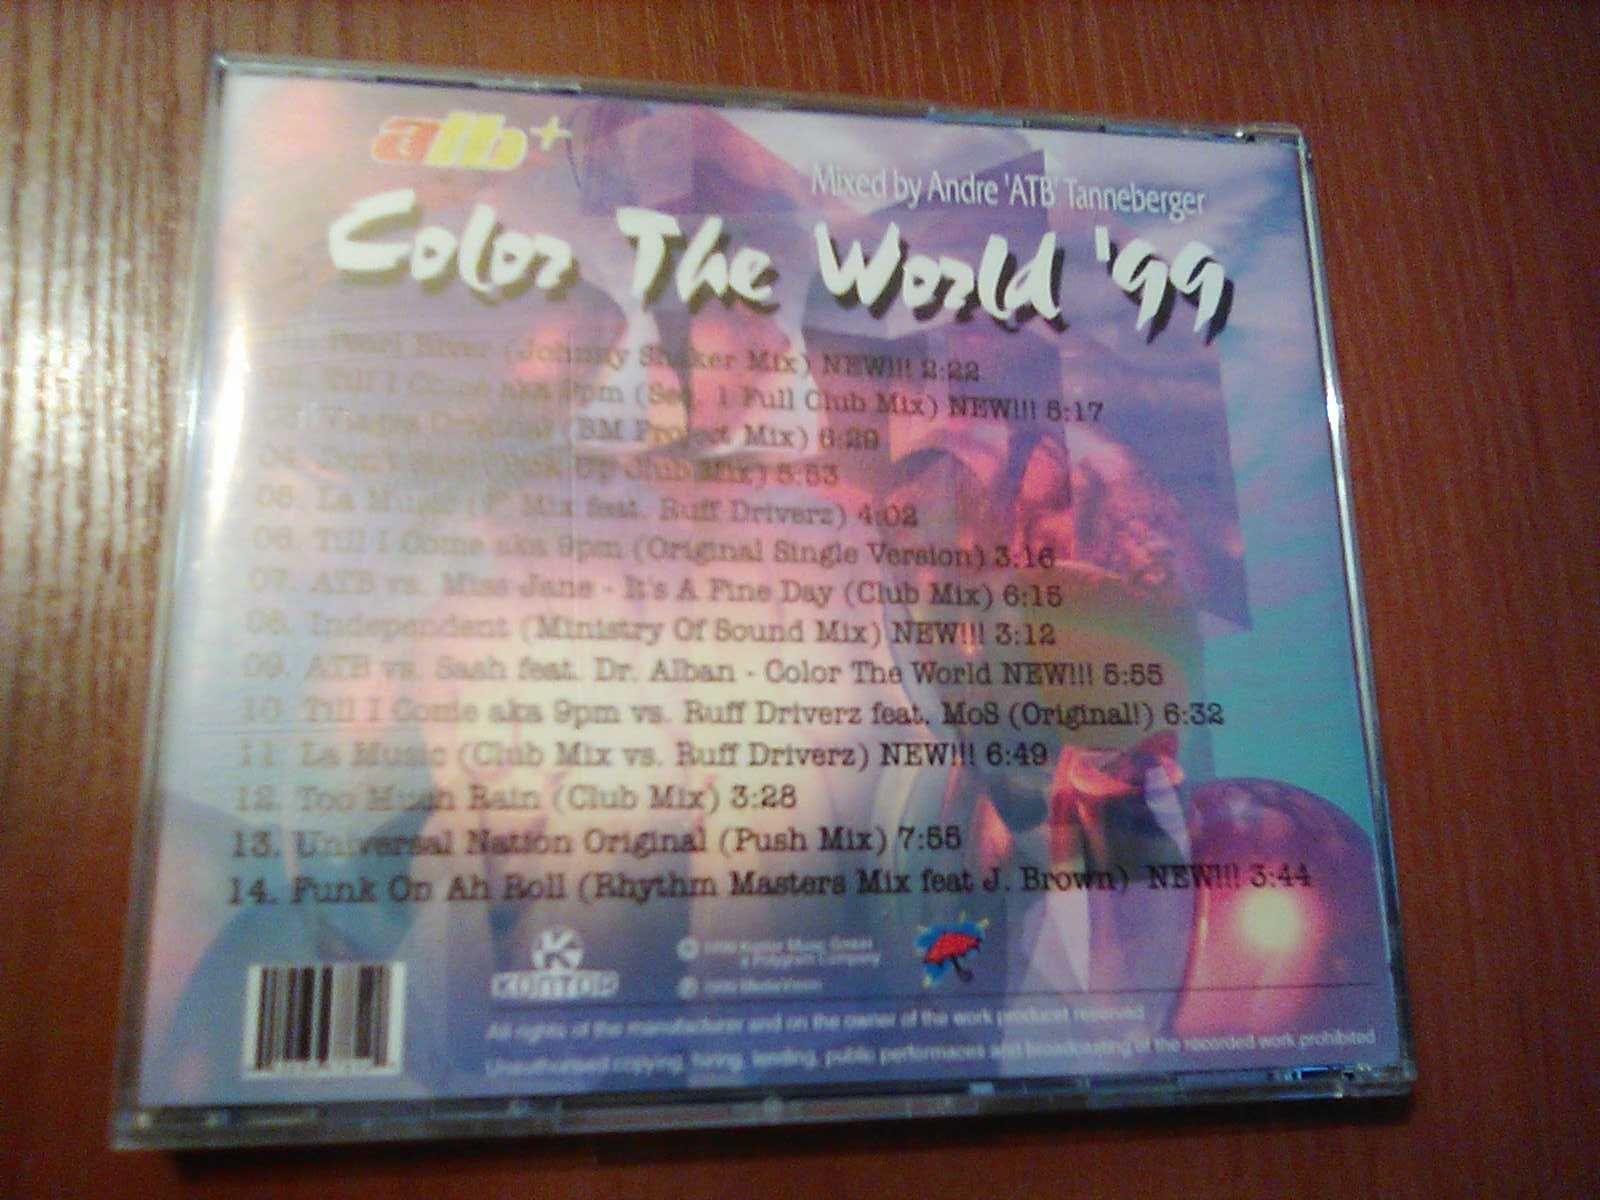 Музыкальный CD ATB альбом Color The World 99 1999 год